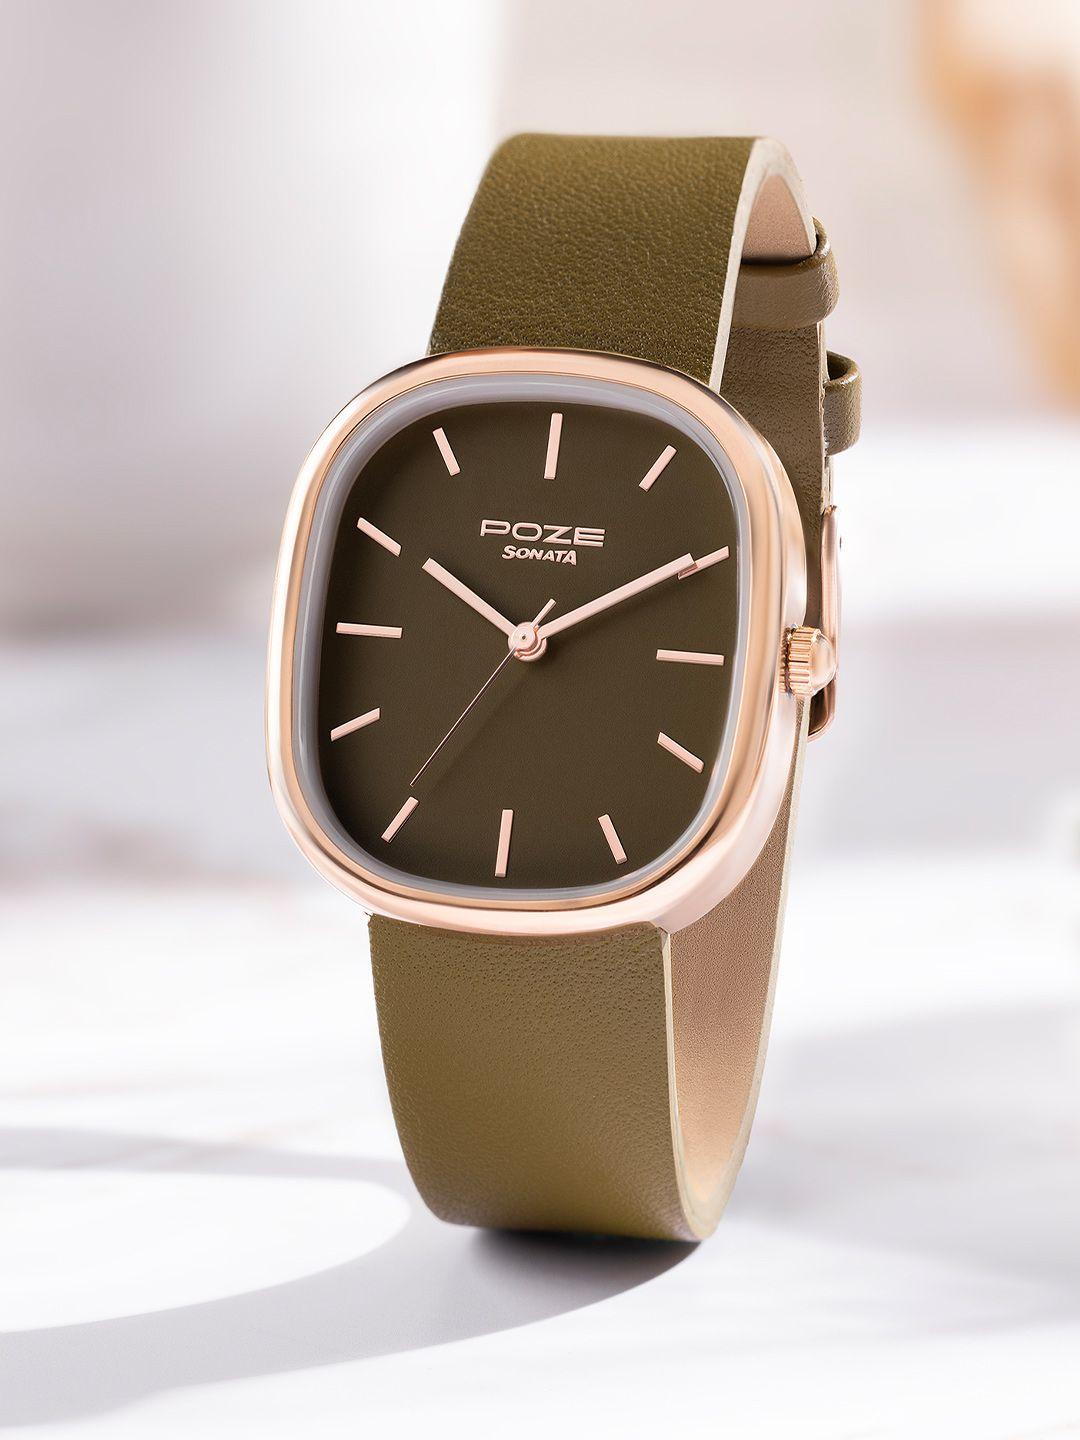 sonata-poze-women-textured-dial-&-leather-straps-analogue-watch-sp80074wl01w